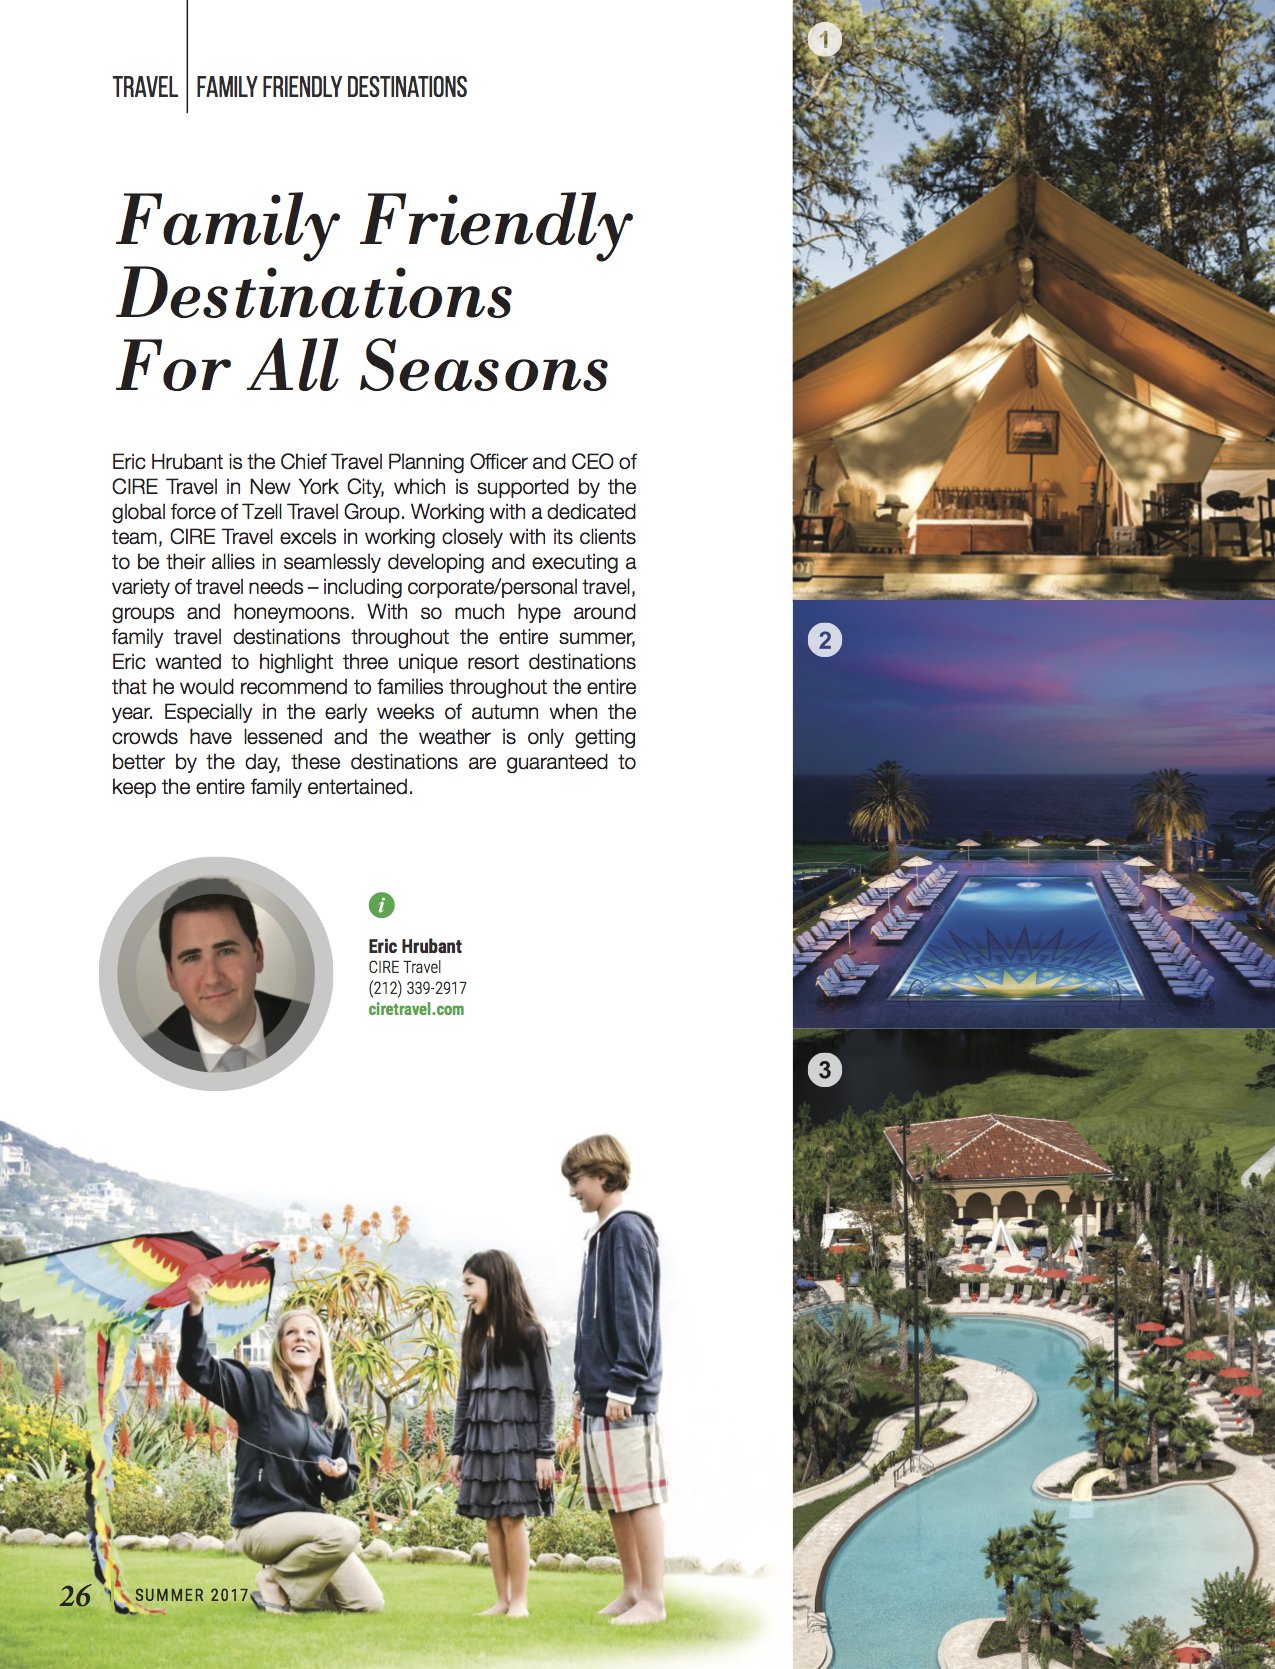 LuxeGetaways - Luxury Travel - Luxury Travel Magazine - Luxe Getaways - Luxury Lifestyle - Family Travel - Family Hotels - CIRE Travel - Tzell Travel